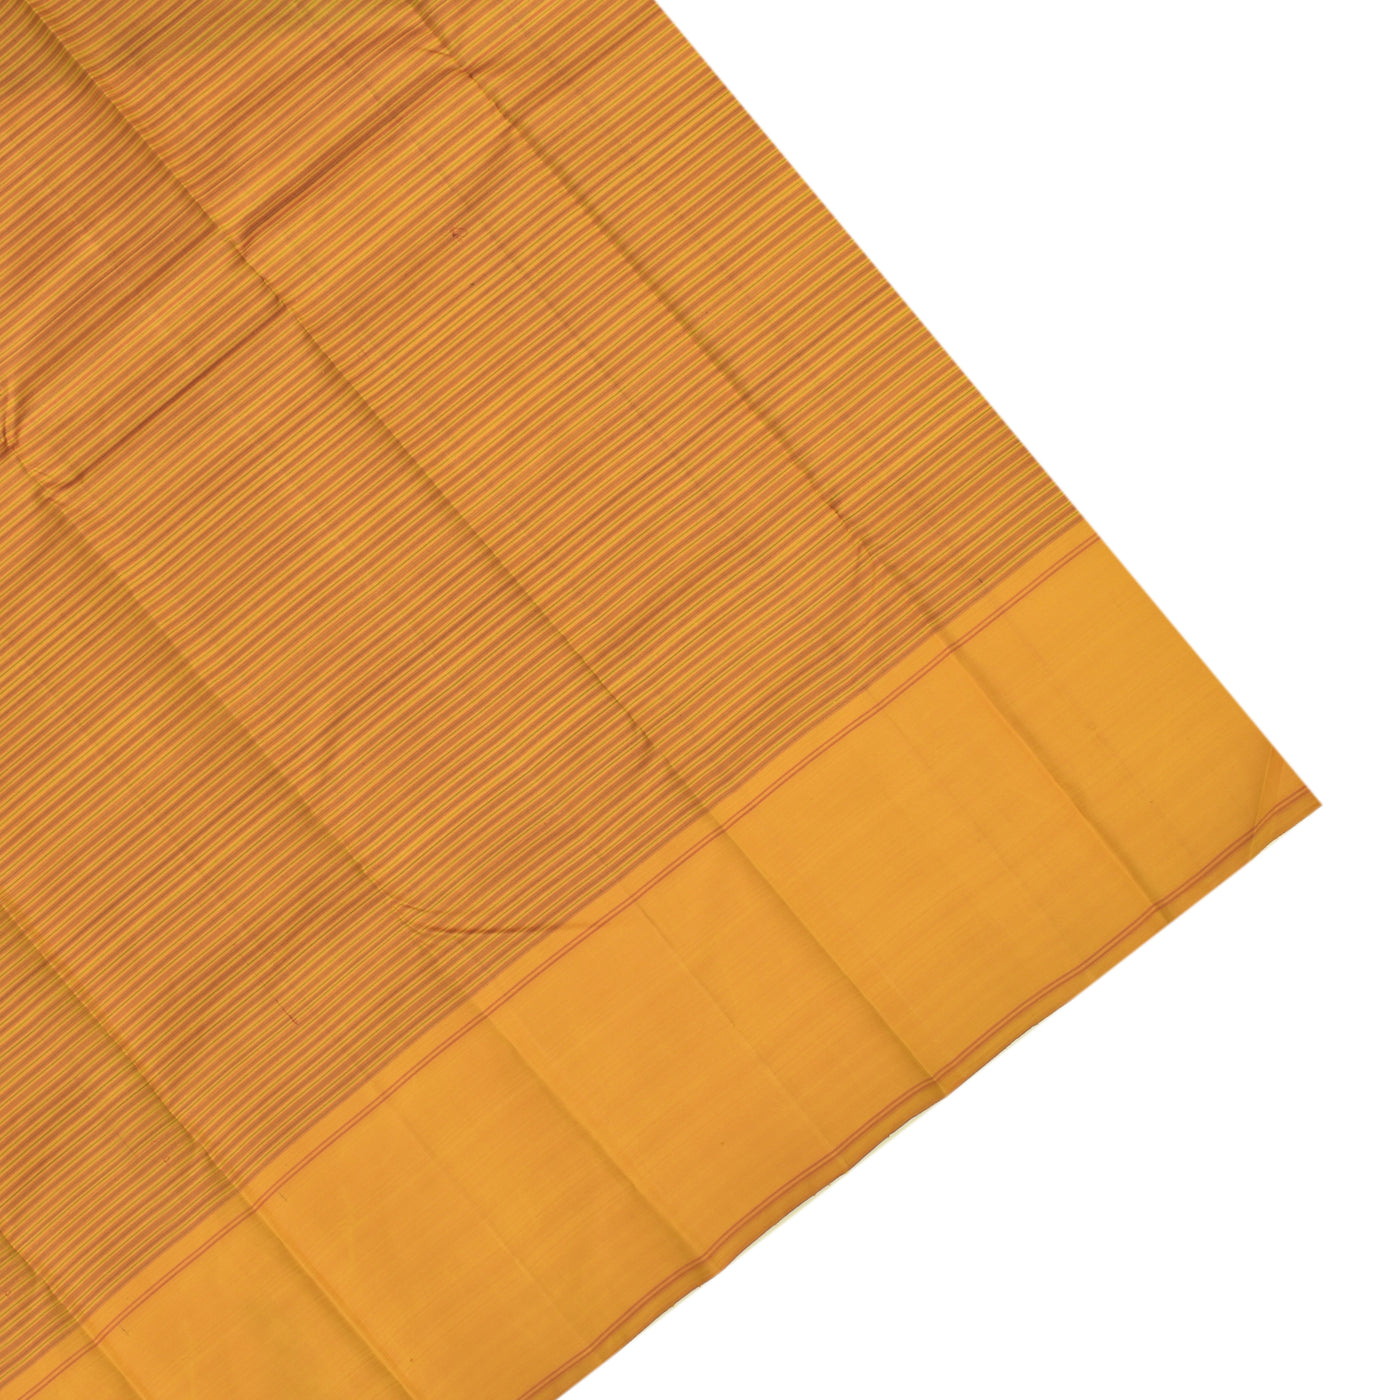 Mustard Kanchipuram Silk Saree with Small Checks Design